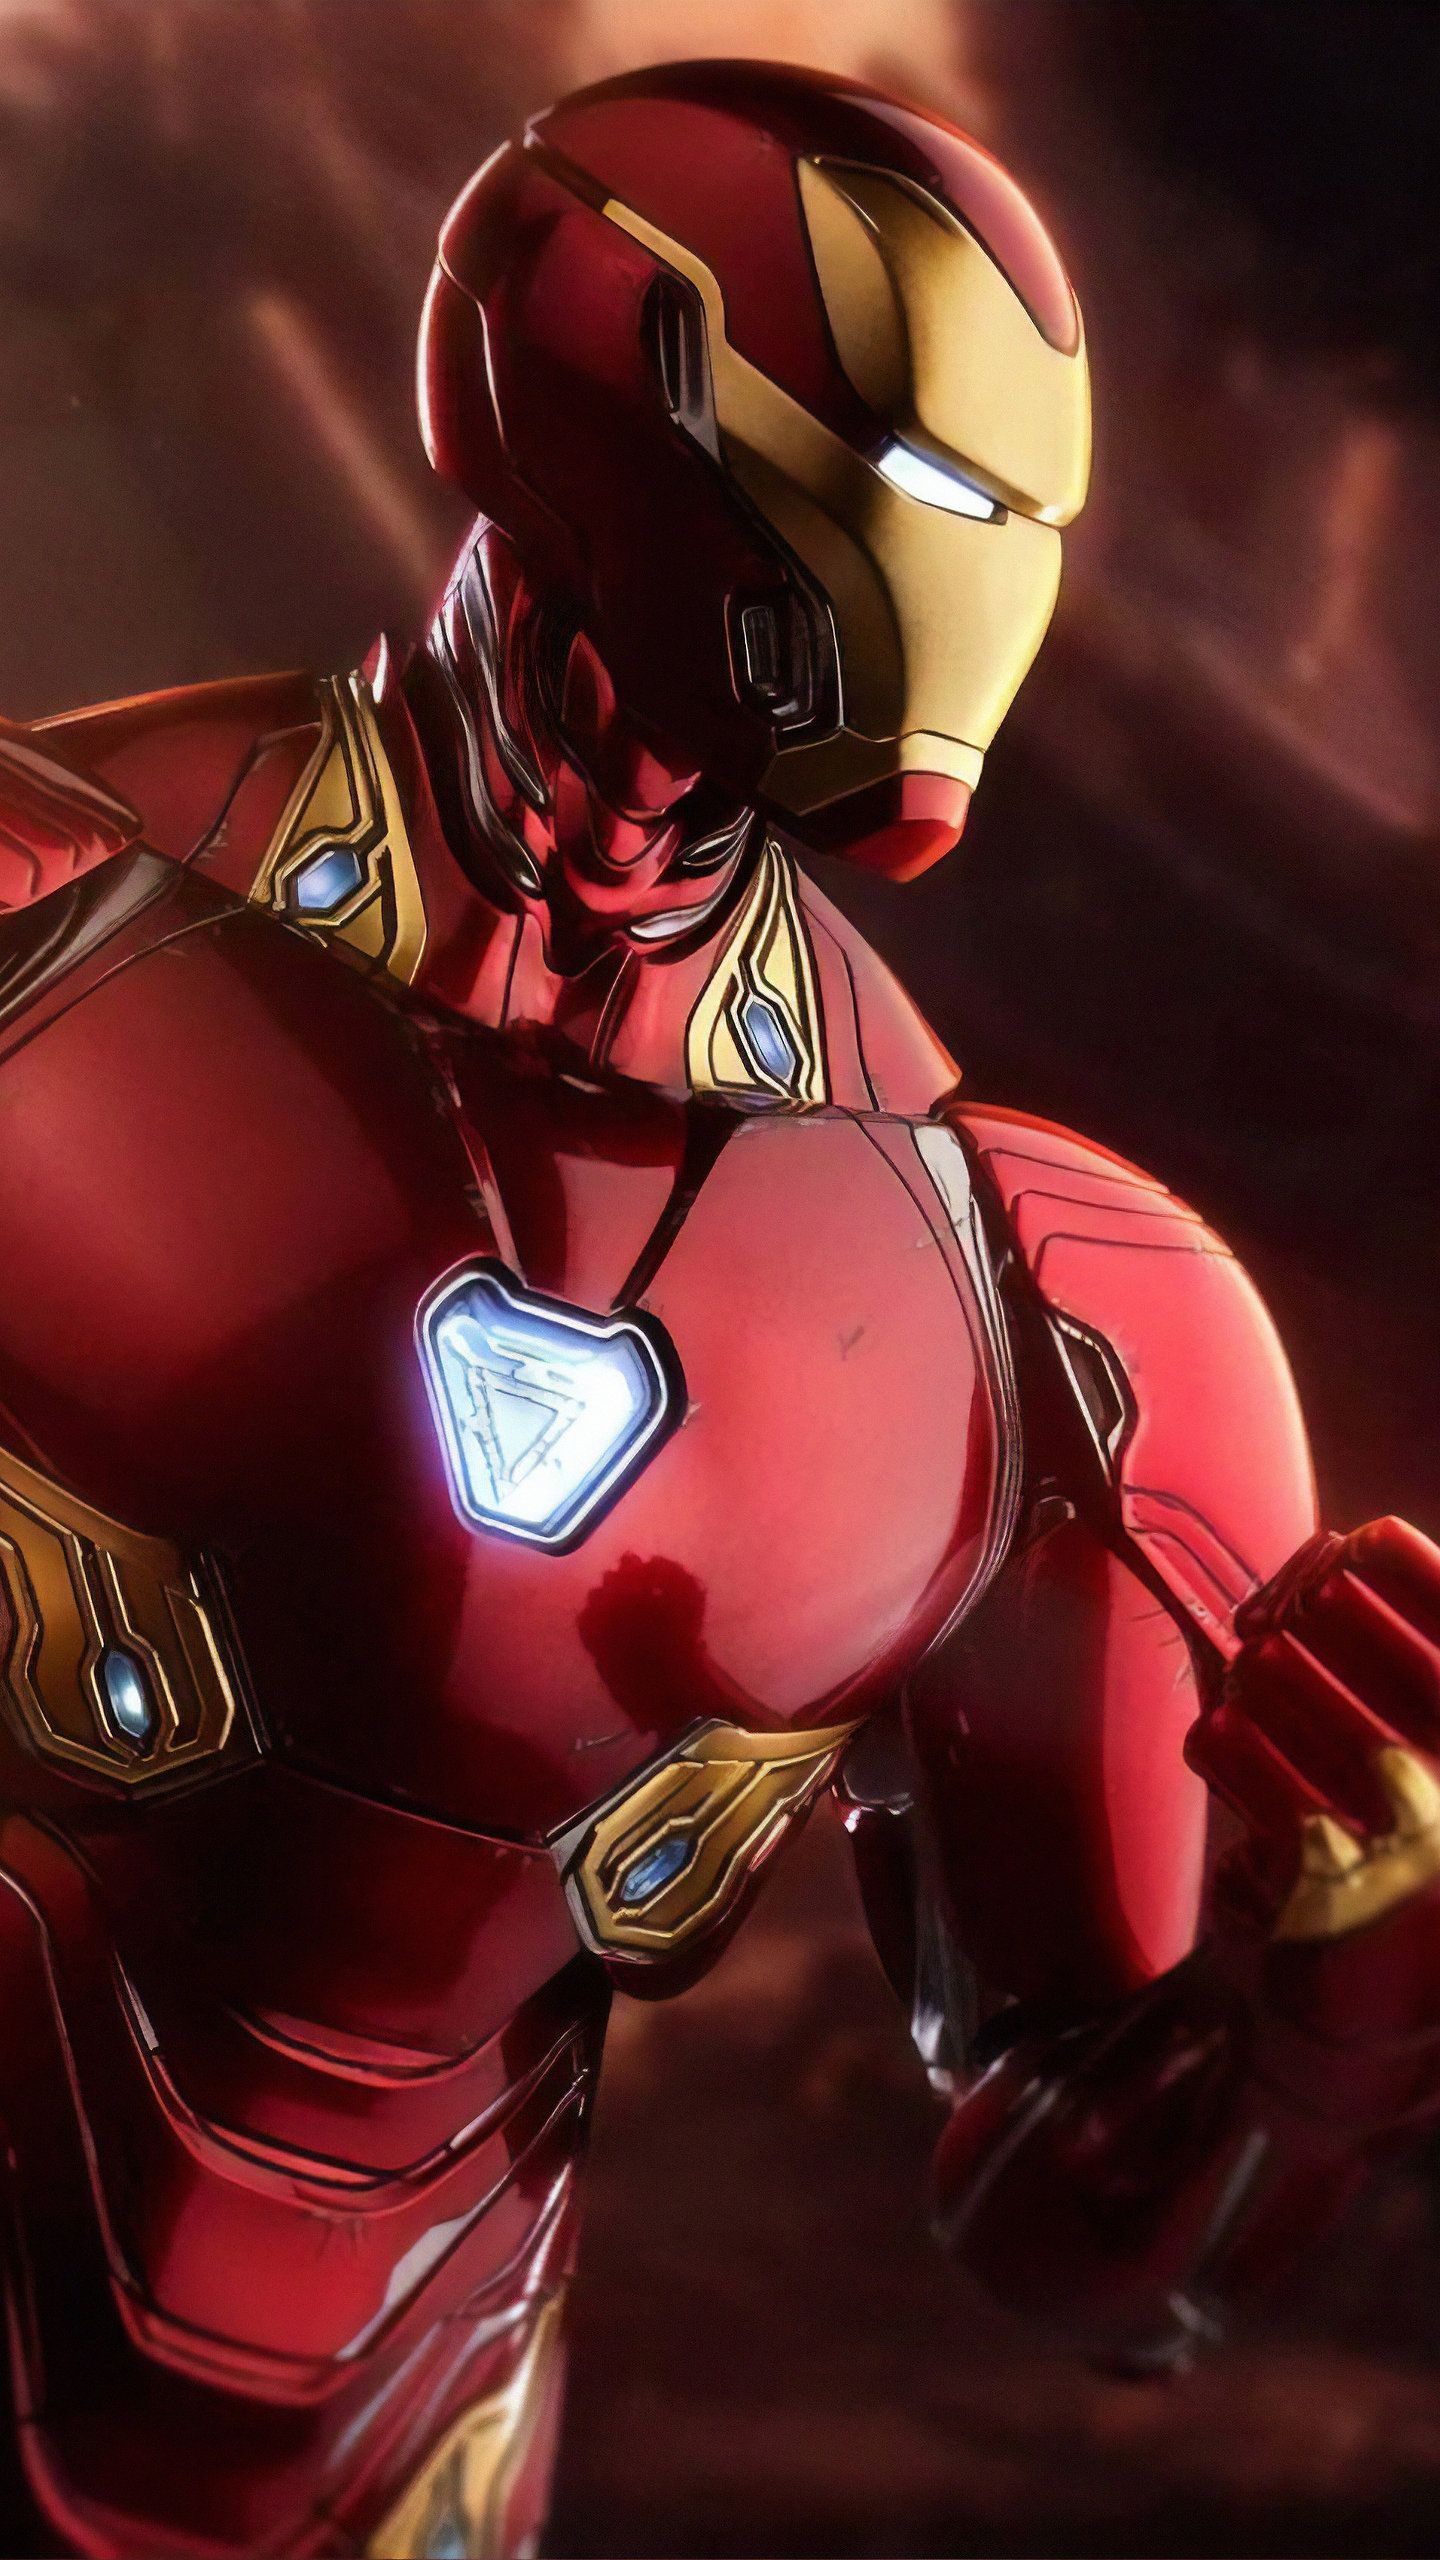 4K New Ironman, HD Superheroes Wallpaper Photo and Picture. Iron man avengers, Iron man HD wallpaper, Marvel iron man